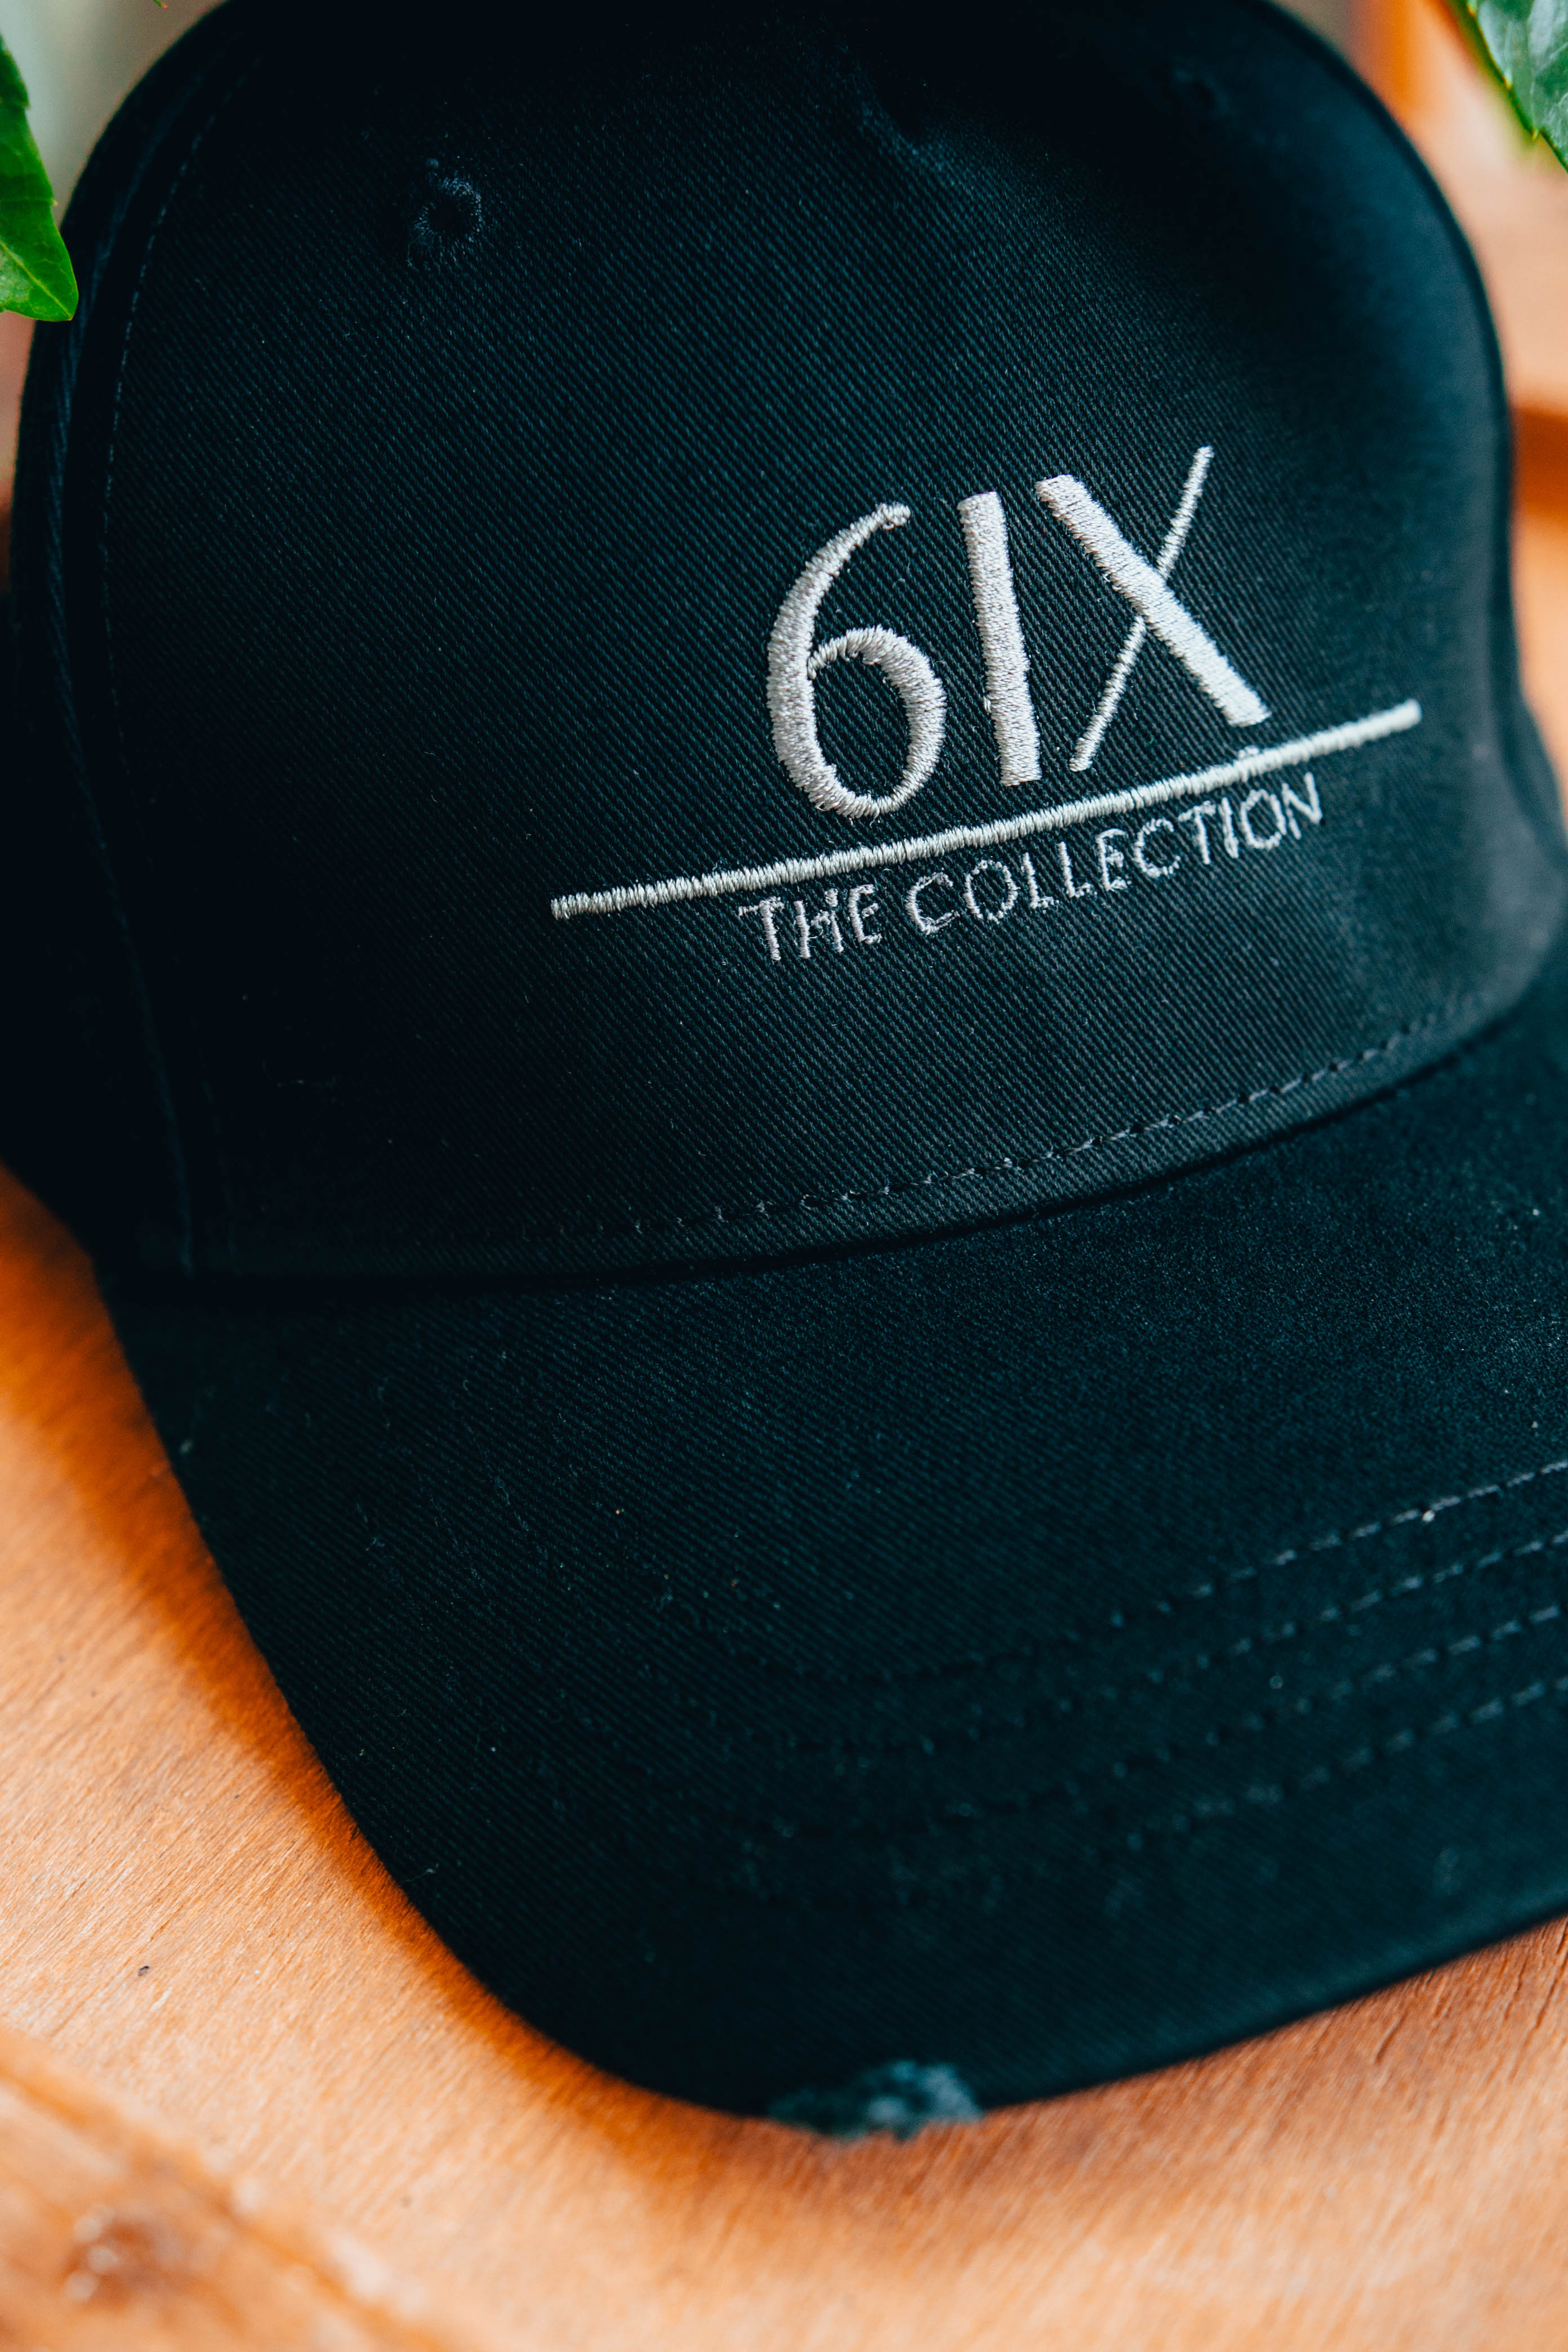 6IX LOGO CAP BLACK W/ GREY CONTRASTING - 6IX Collection 